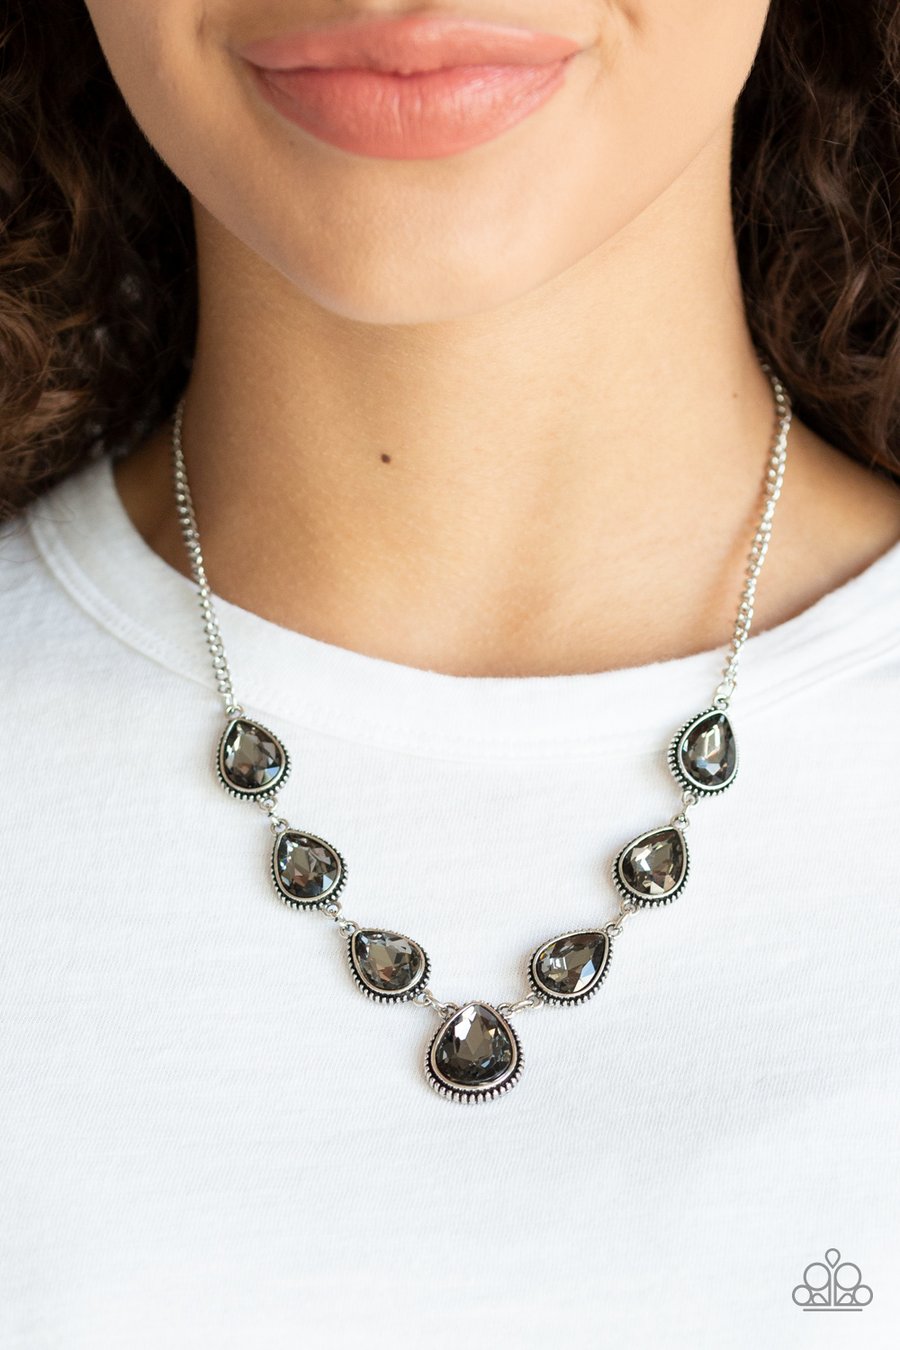 Paparazzi Accessories Socialite Social - Silver Necklaces - Lady T Accessories